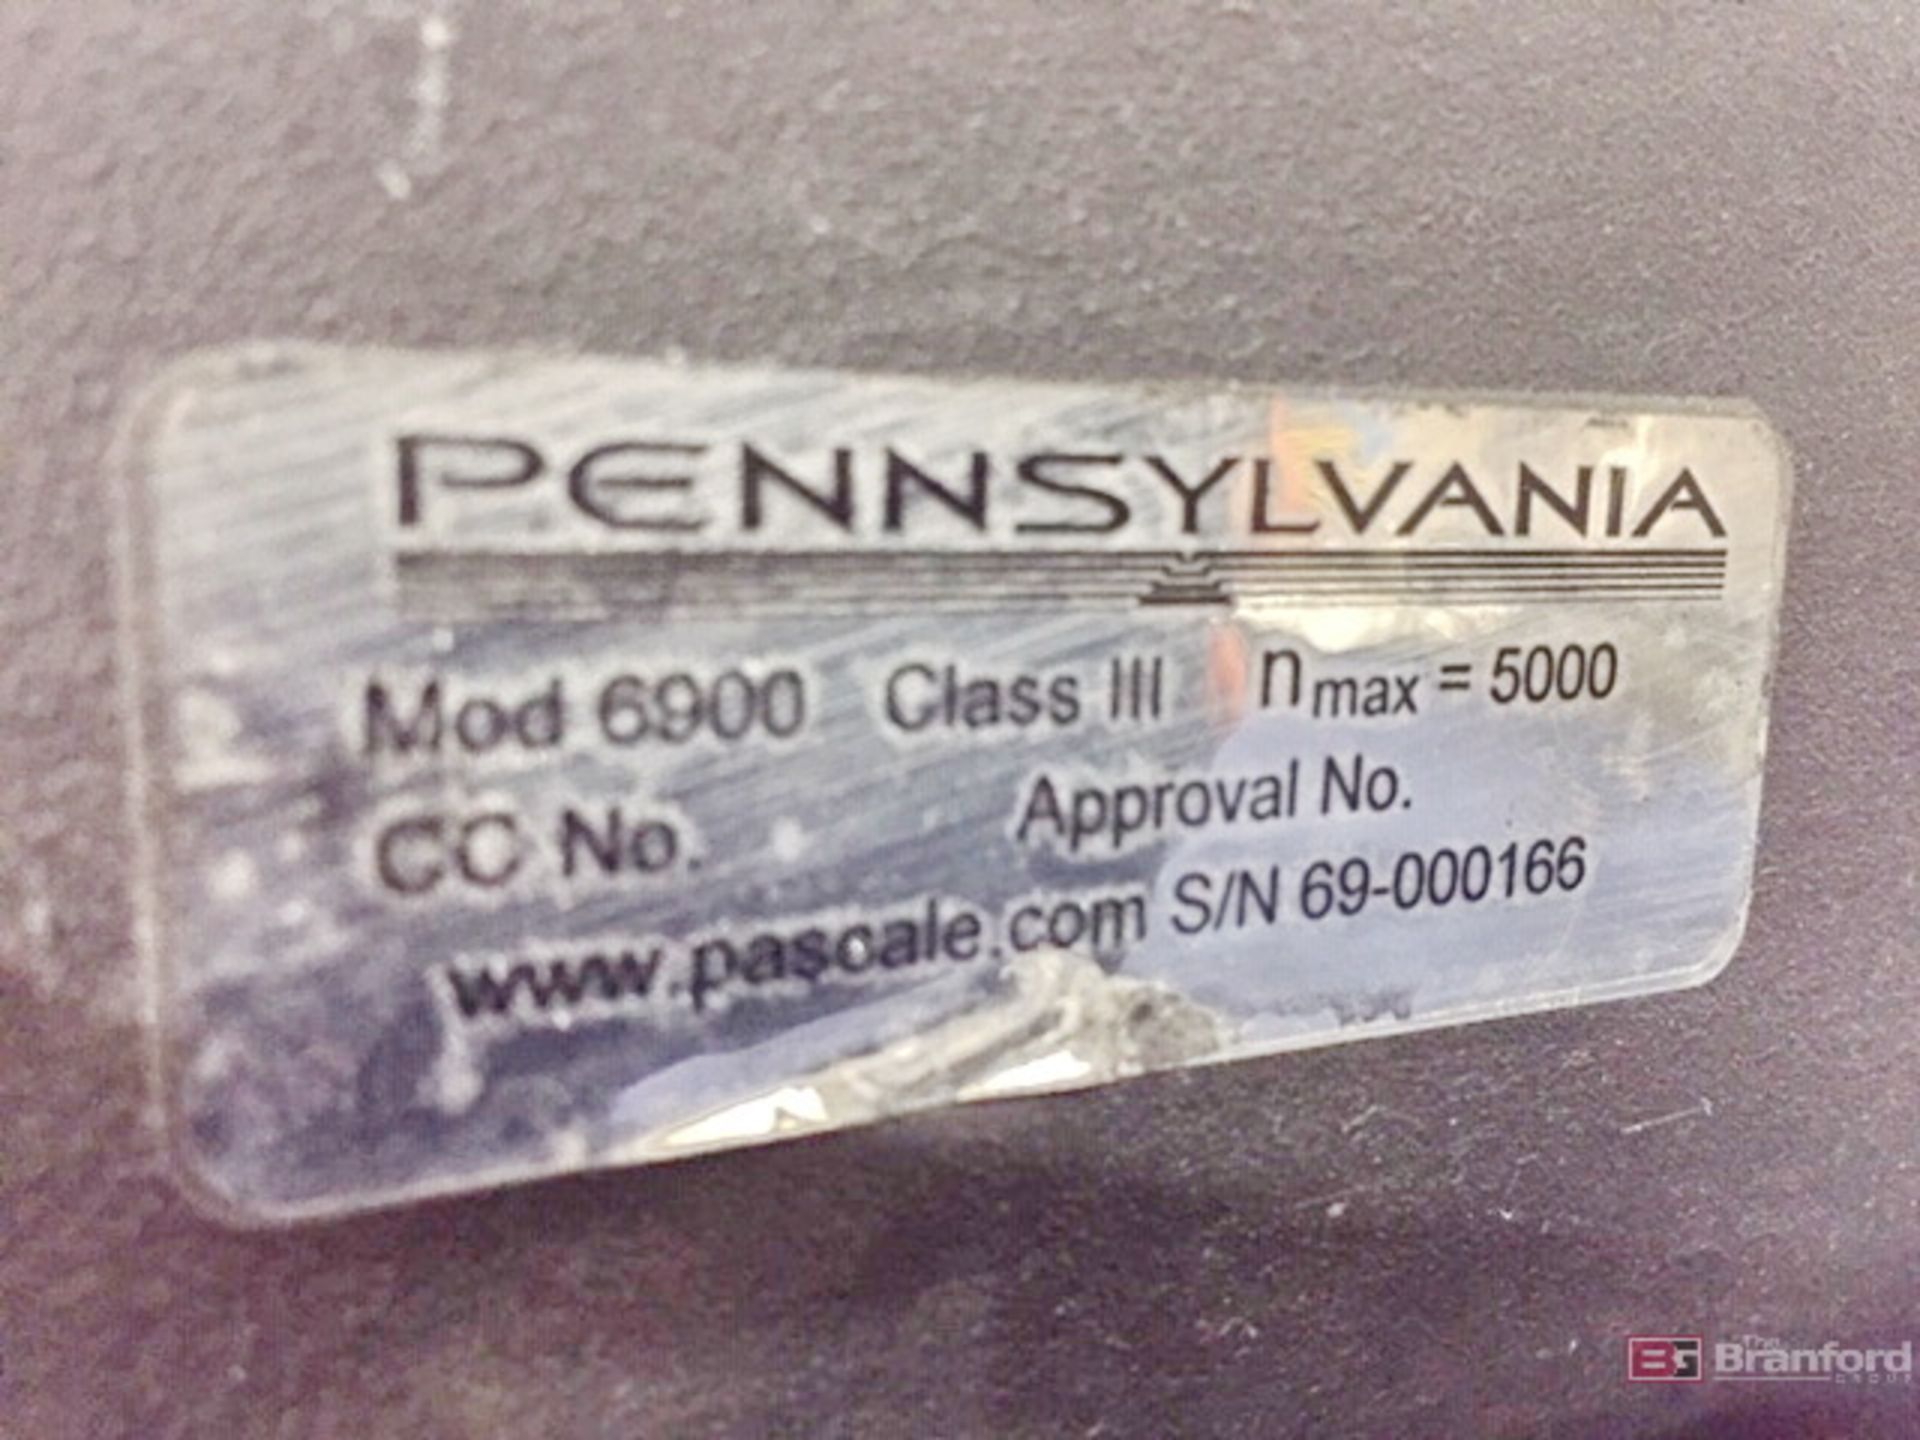 Pennsylvania Scale Low-Profile Barrel Scale - Image 3 of 6